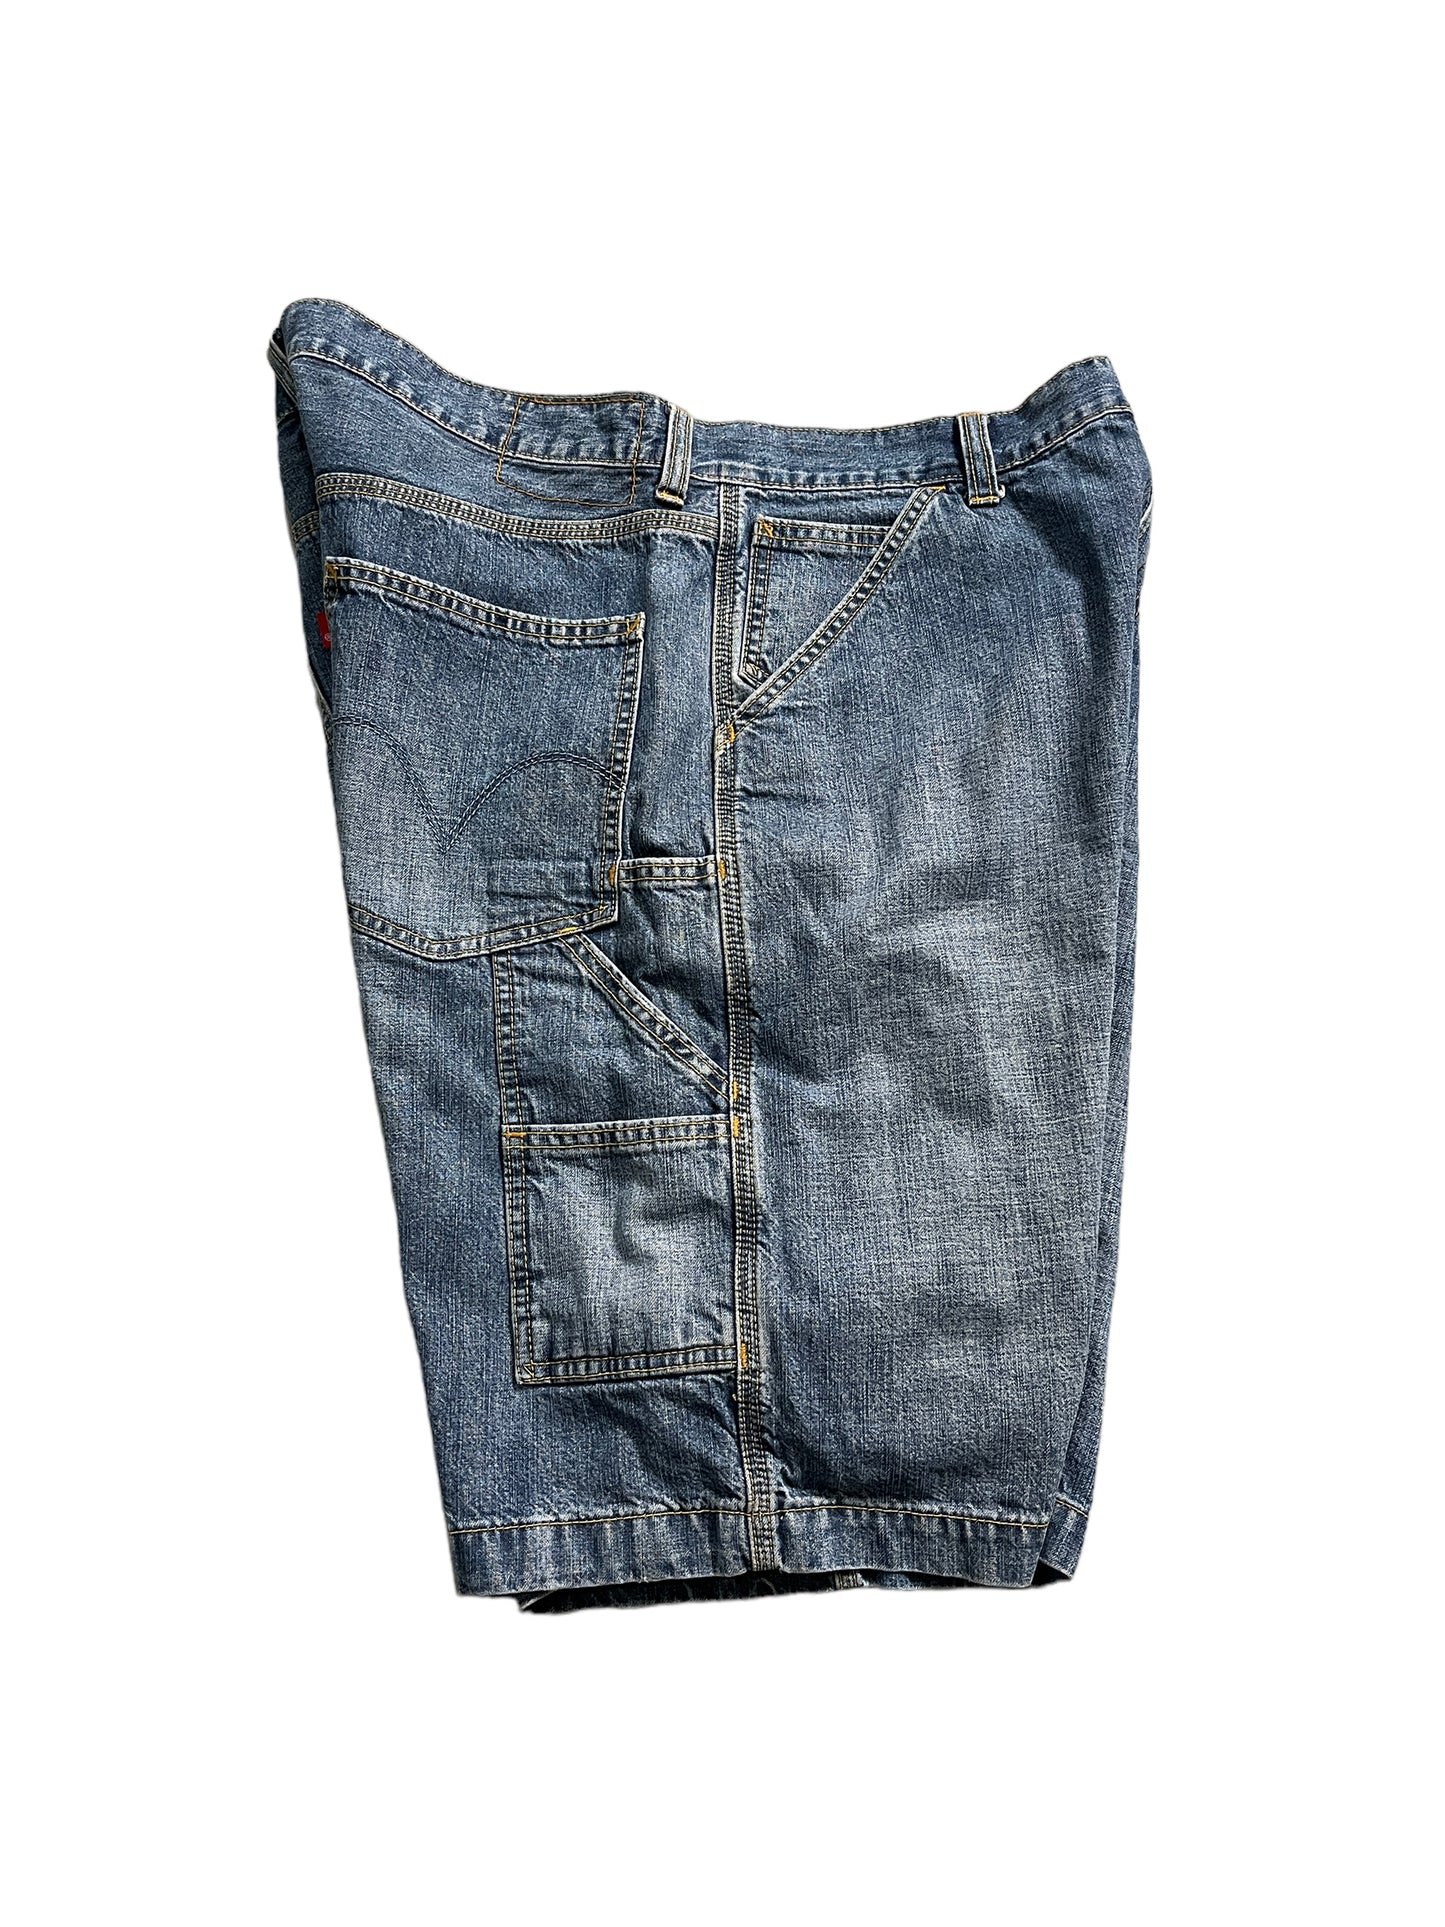 Vintage Levi's Carpenter Jean Shorts